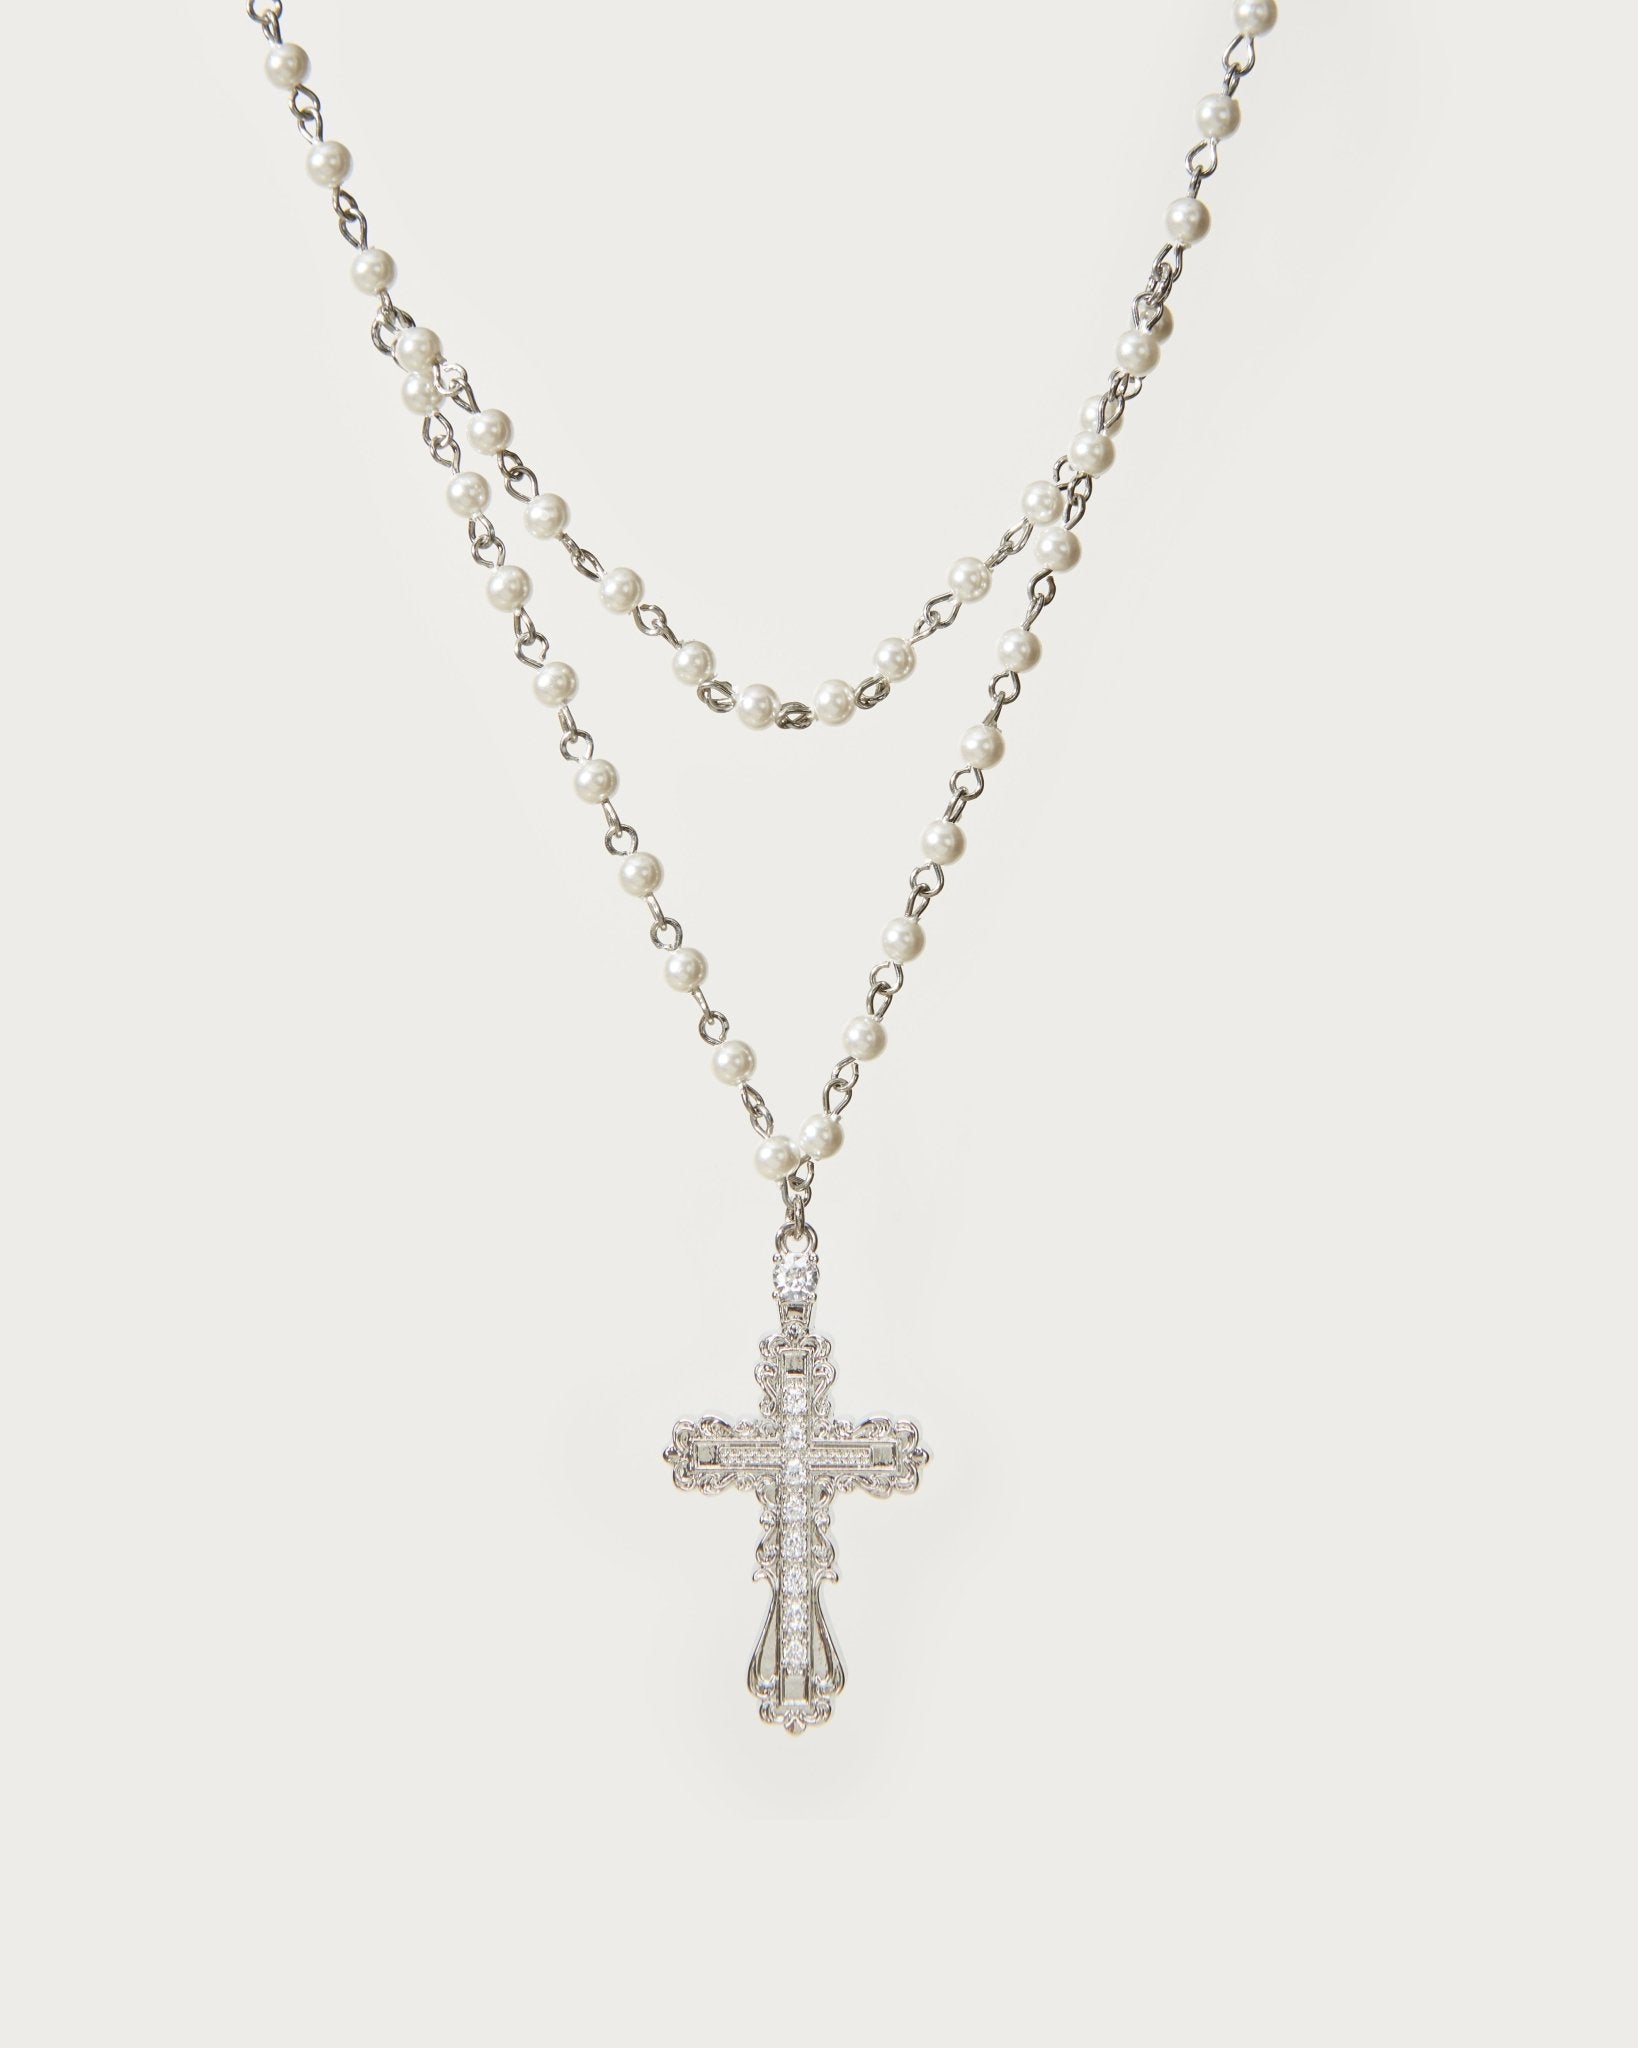 Everette Cross Necklace